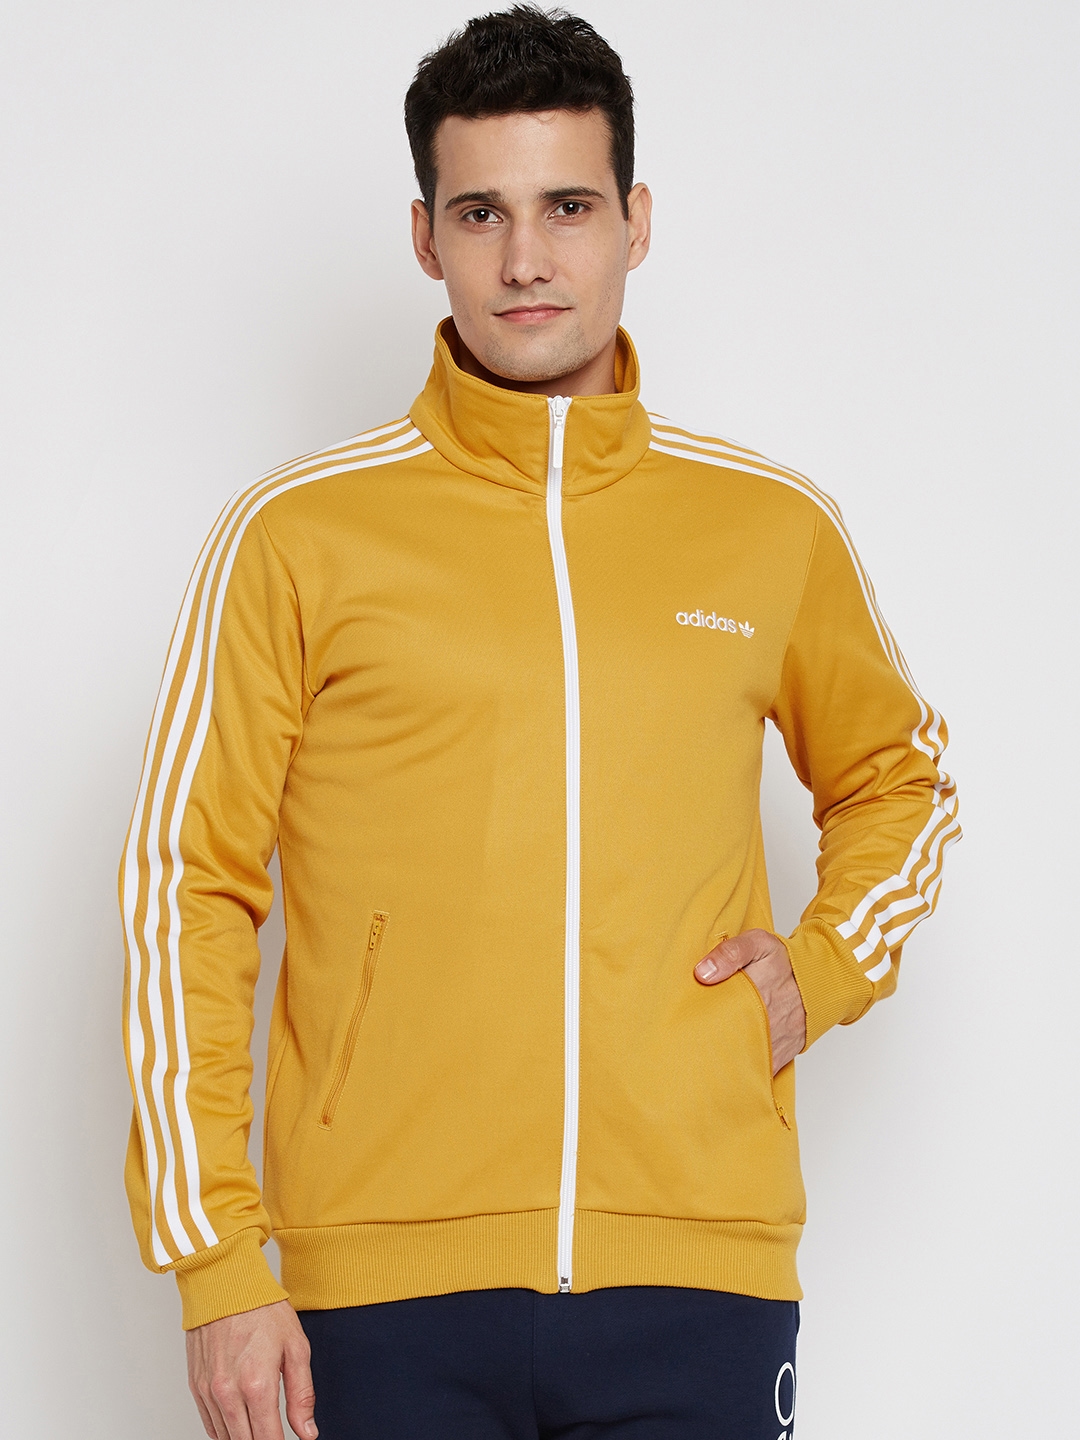 yellow addidas jacket